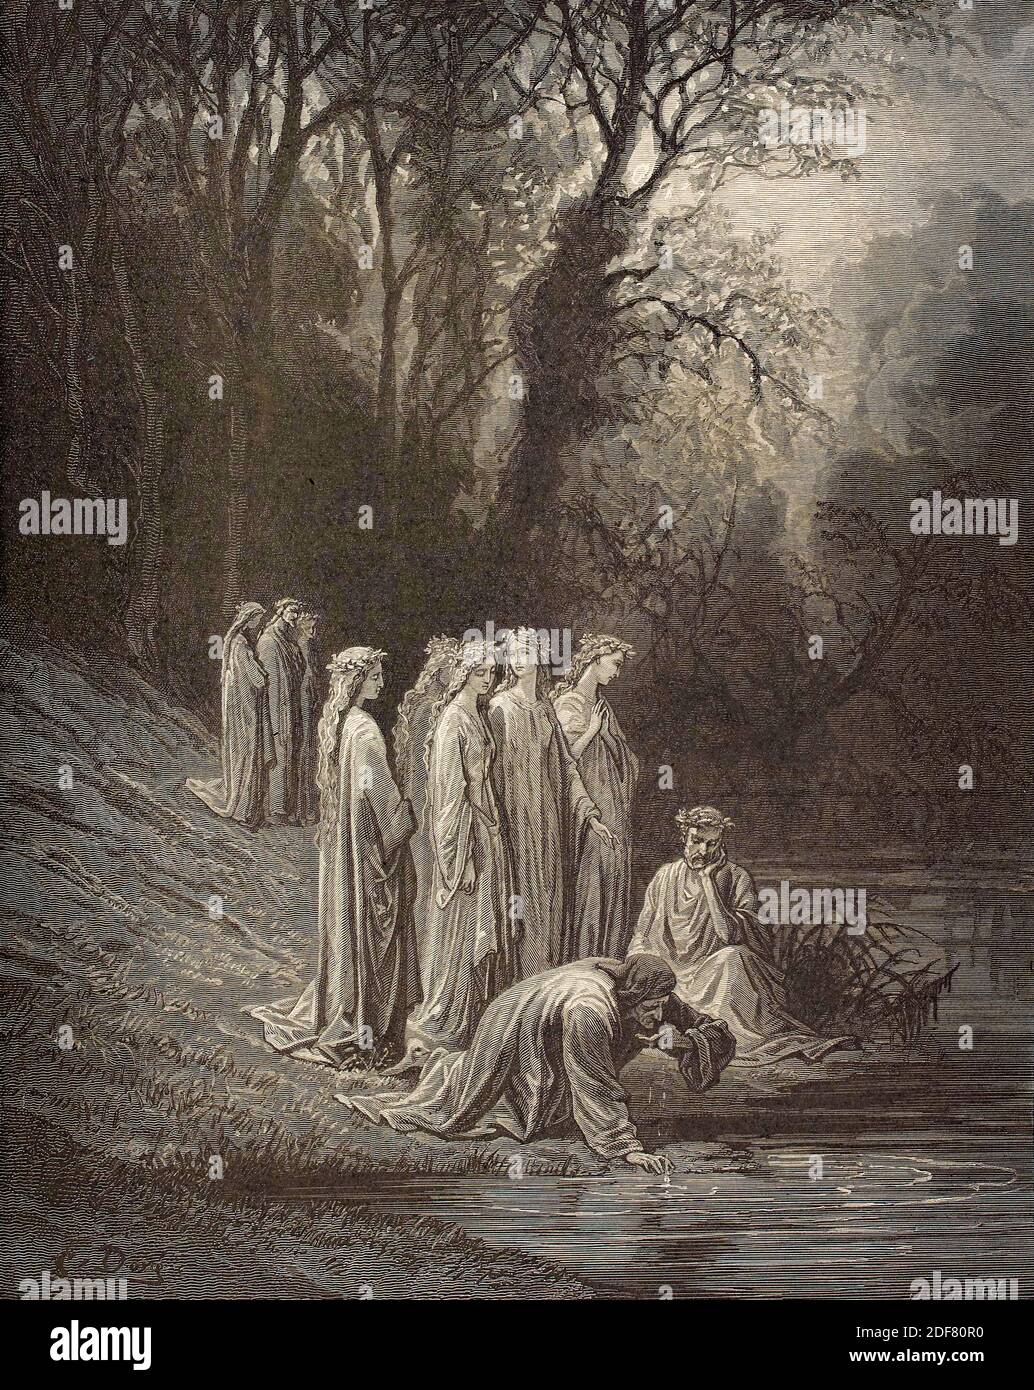 Dante - Divina Commedia - Purgatorio - Ilustración de Gustave Dorè - Canto XXXIII - Dante en el Eunoè Foto de stock